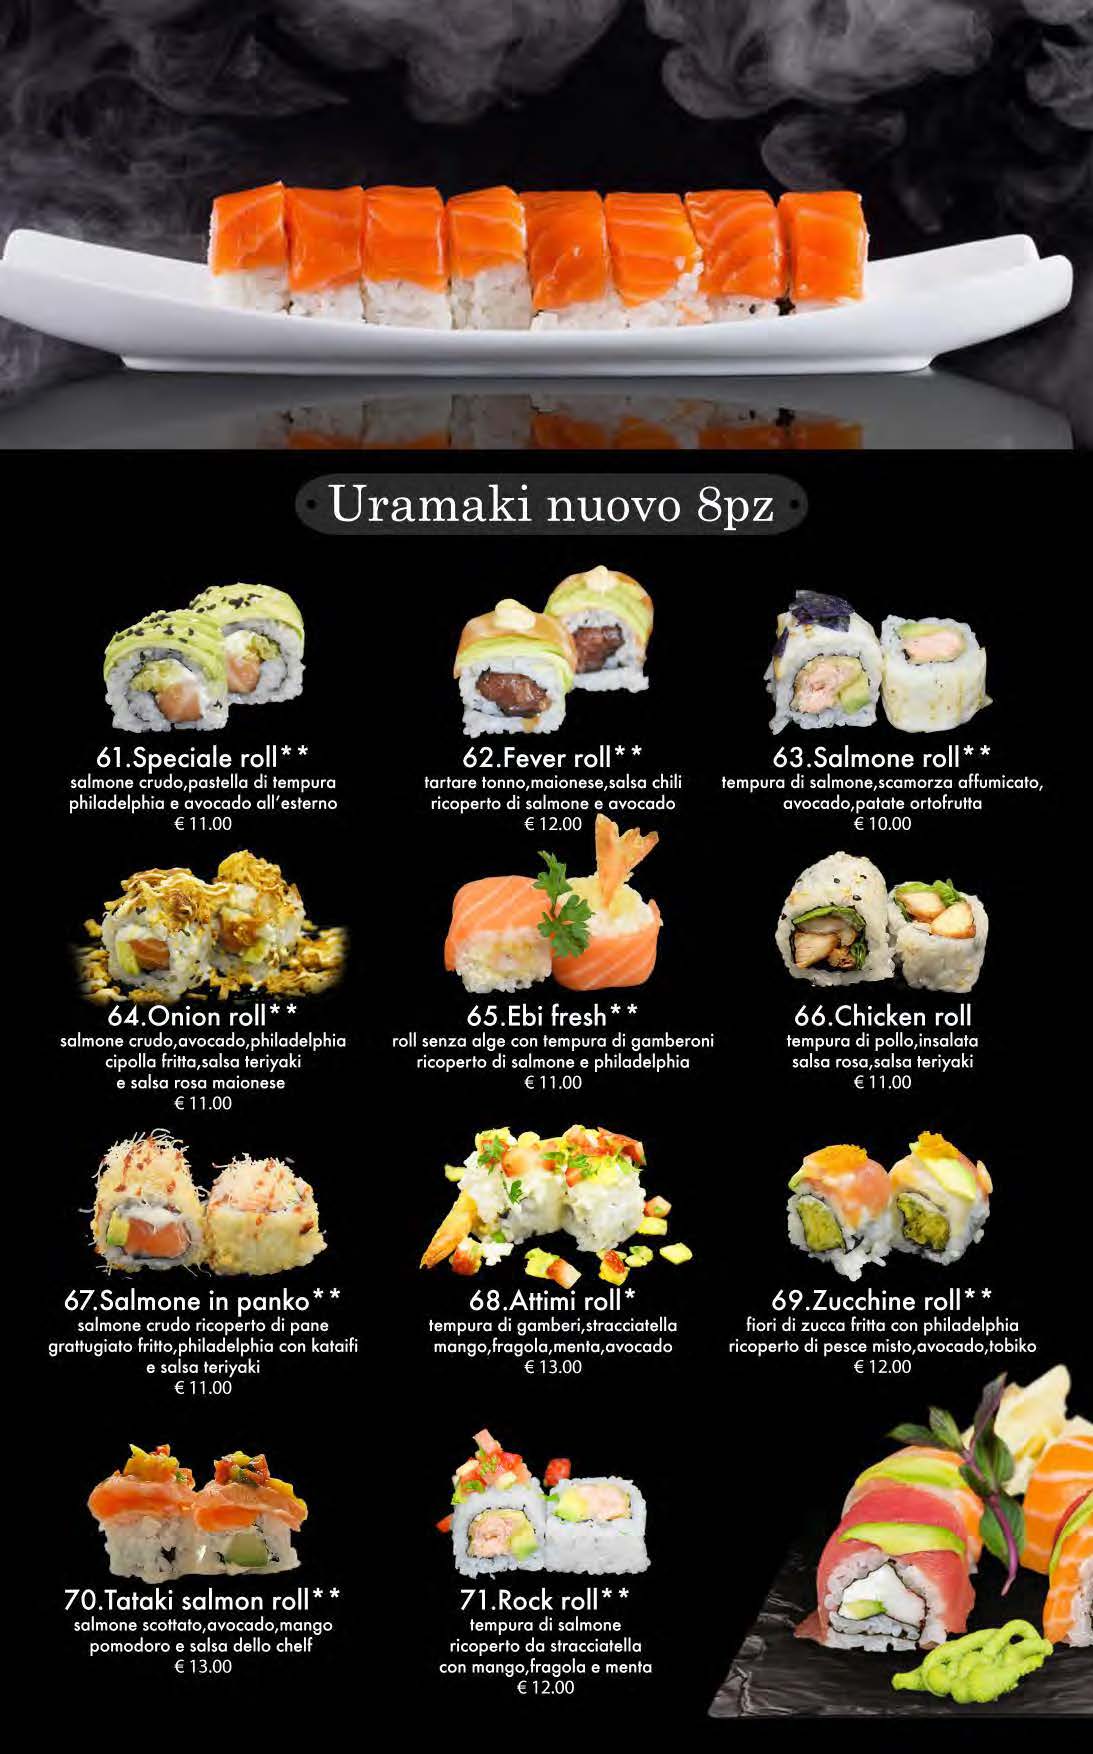 attimi ristorante giapponese padova menù cena pagina 08 uramaki